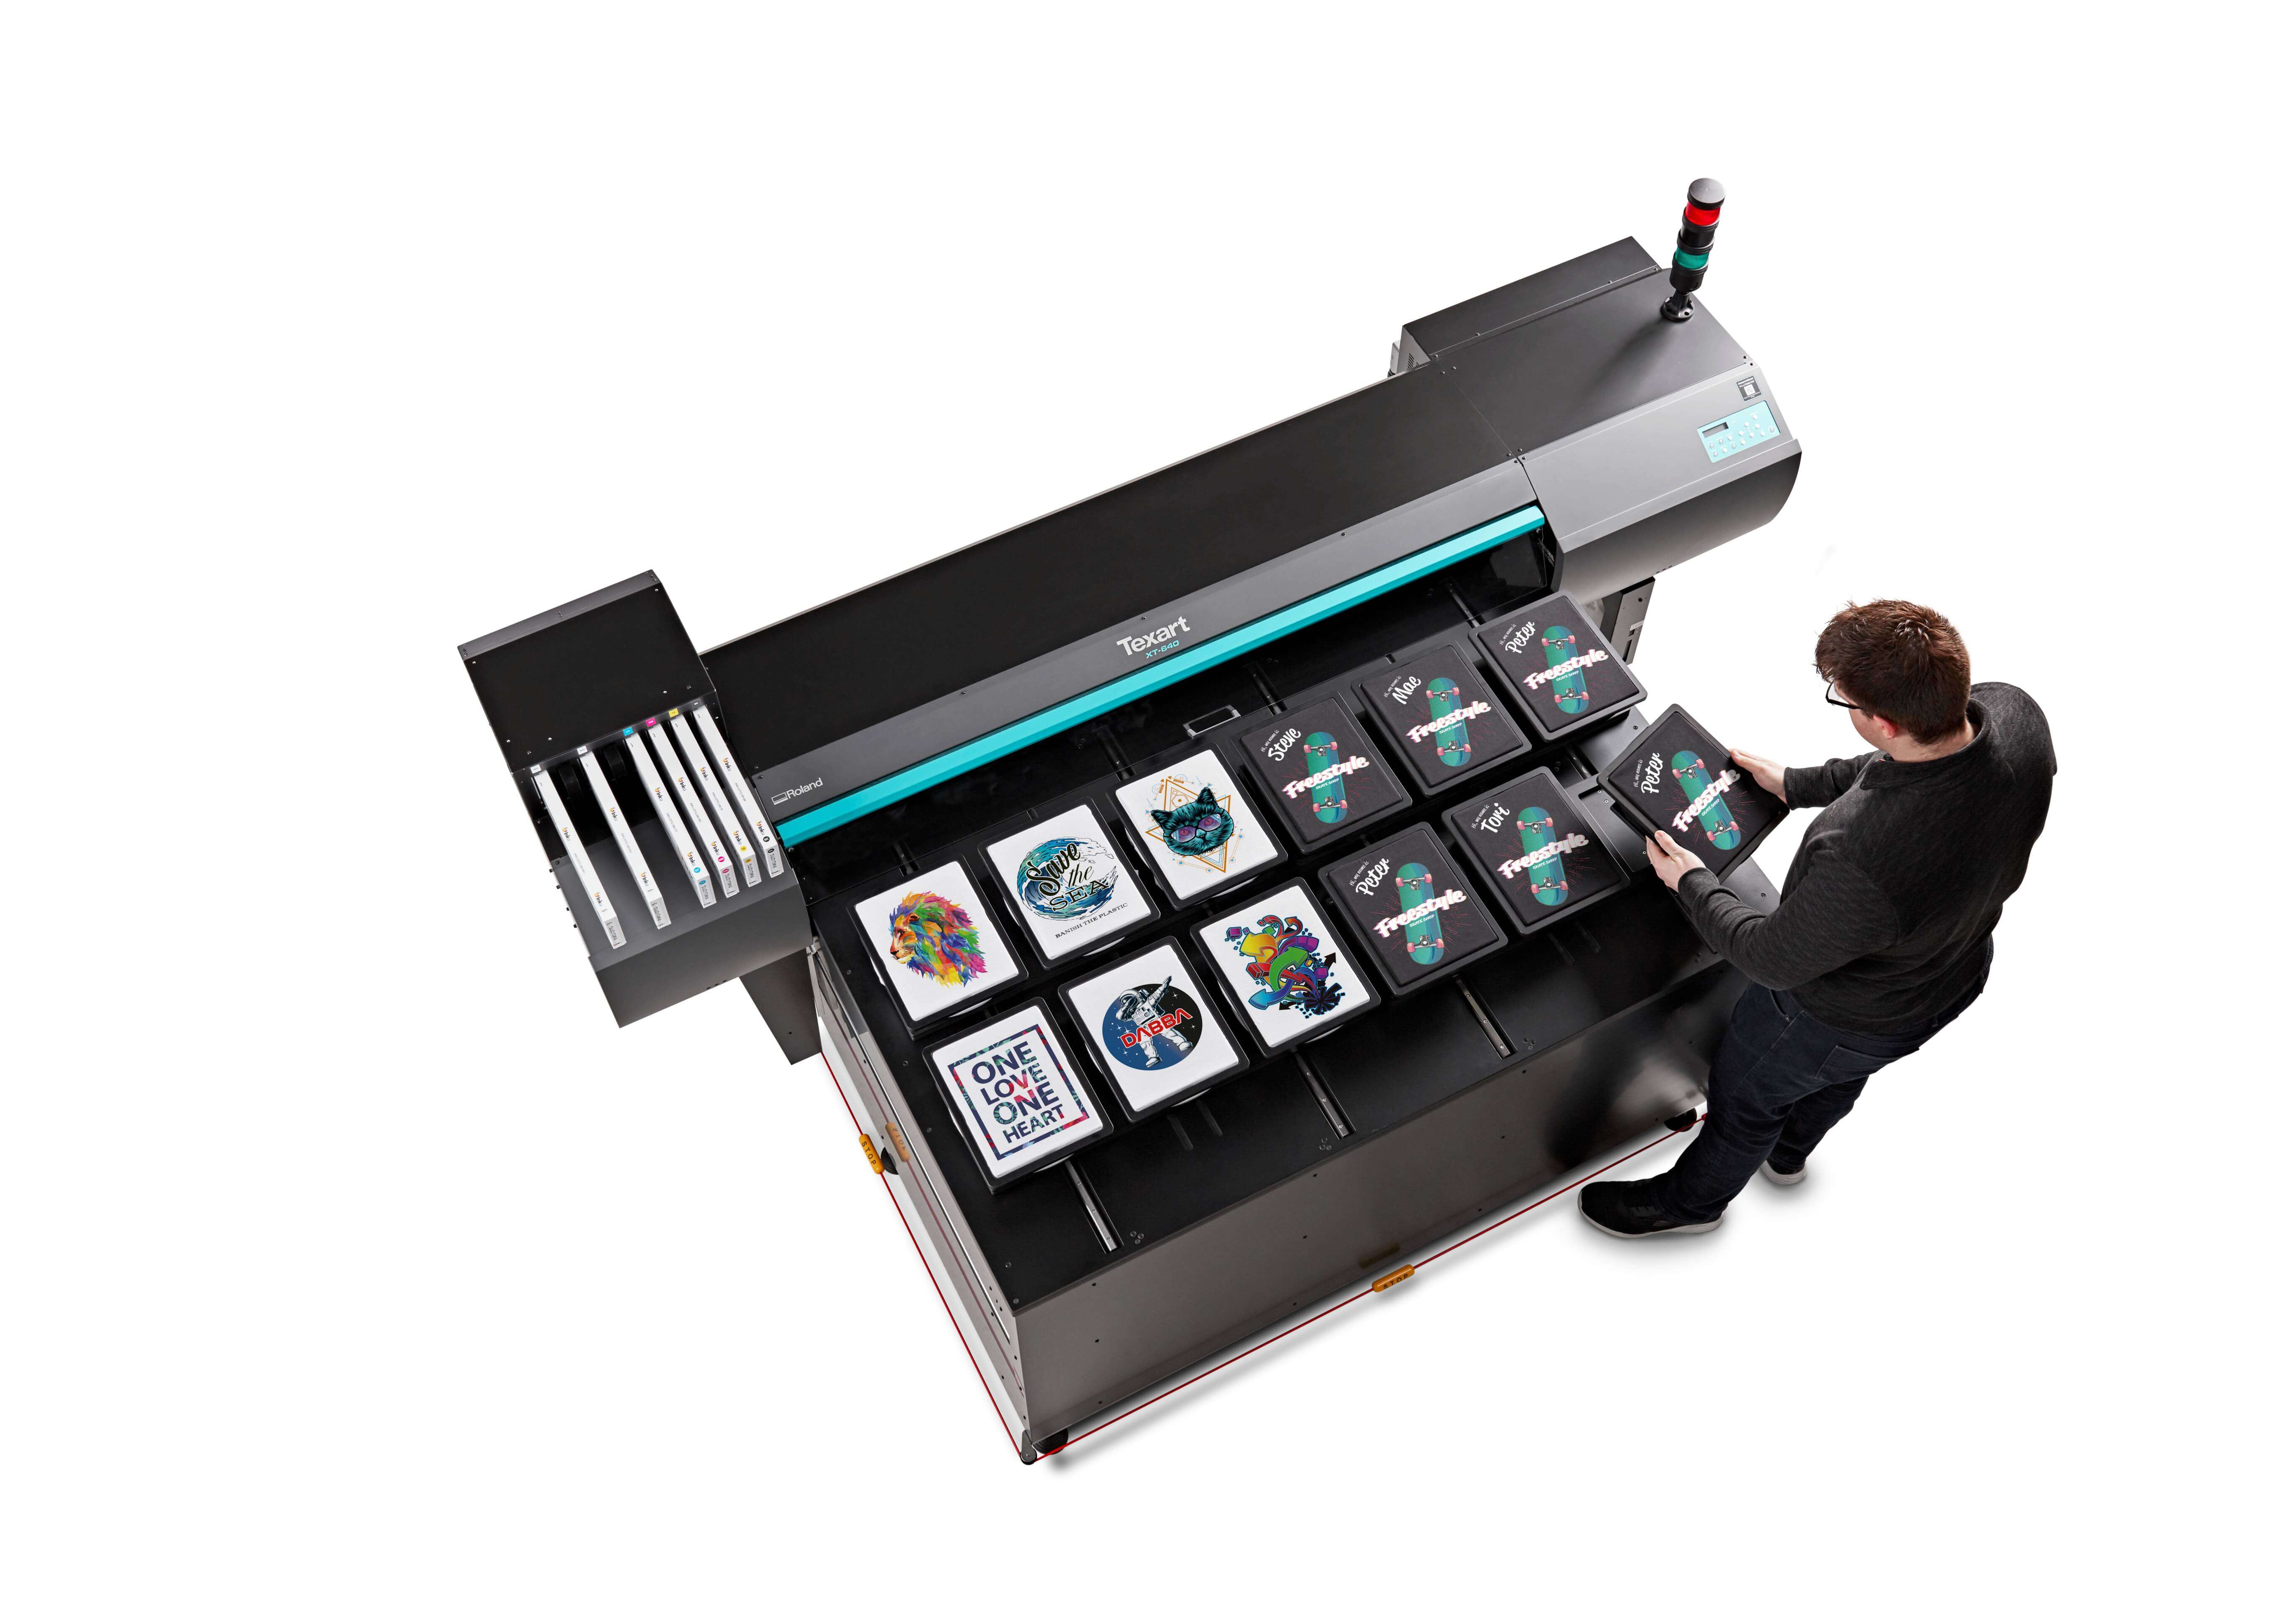 Image of Roland DGA's new Texart XT-640S direct-to-garment printer.